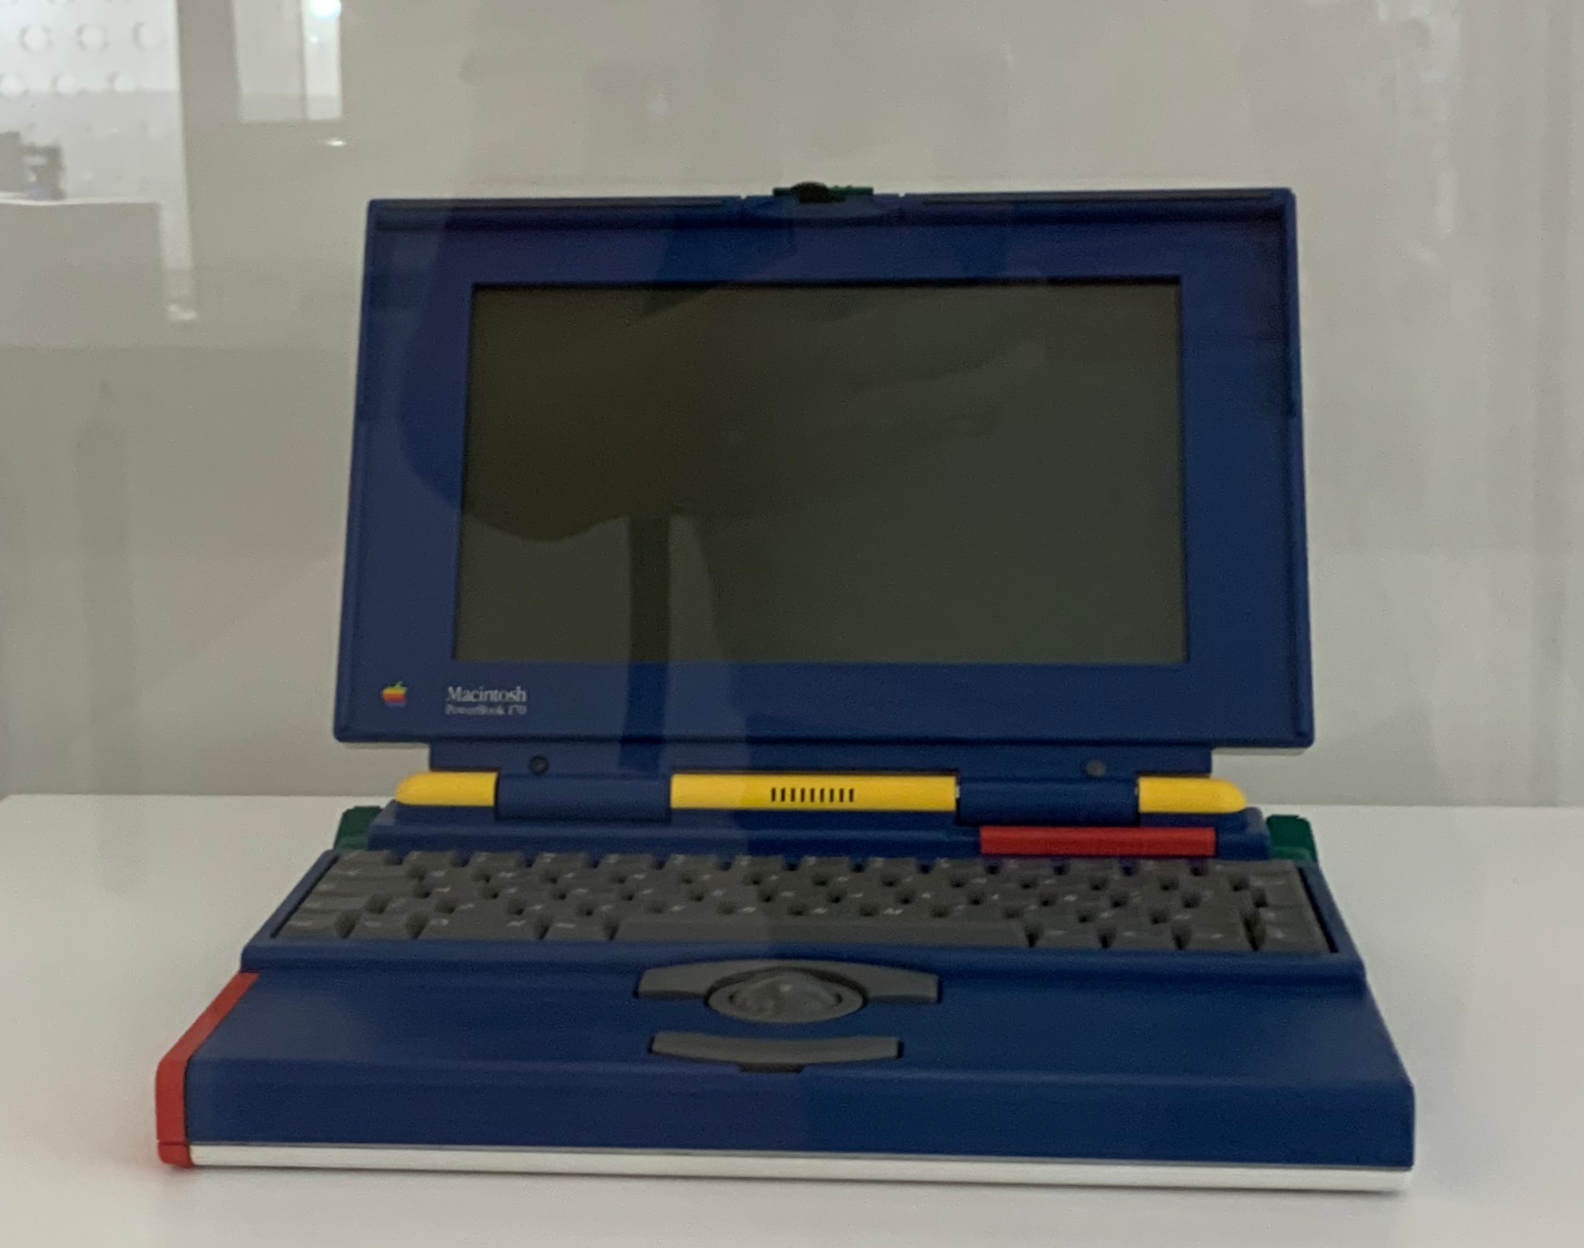 PowerBook 170 - Wikipedia